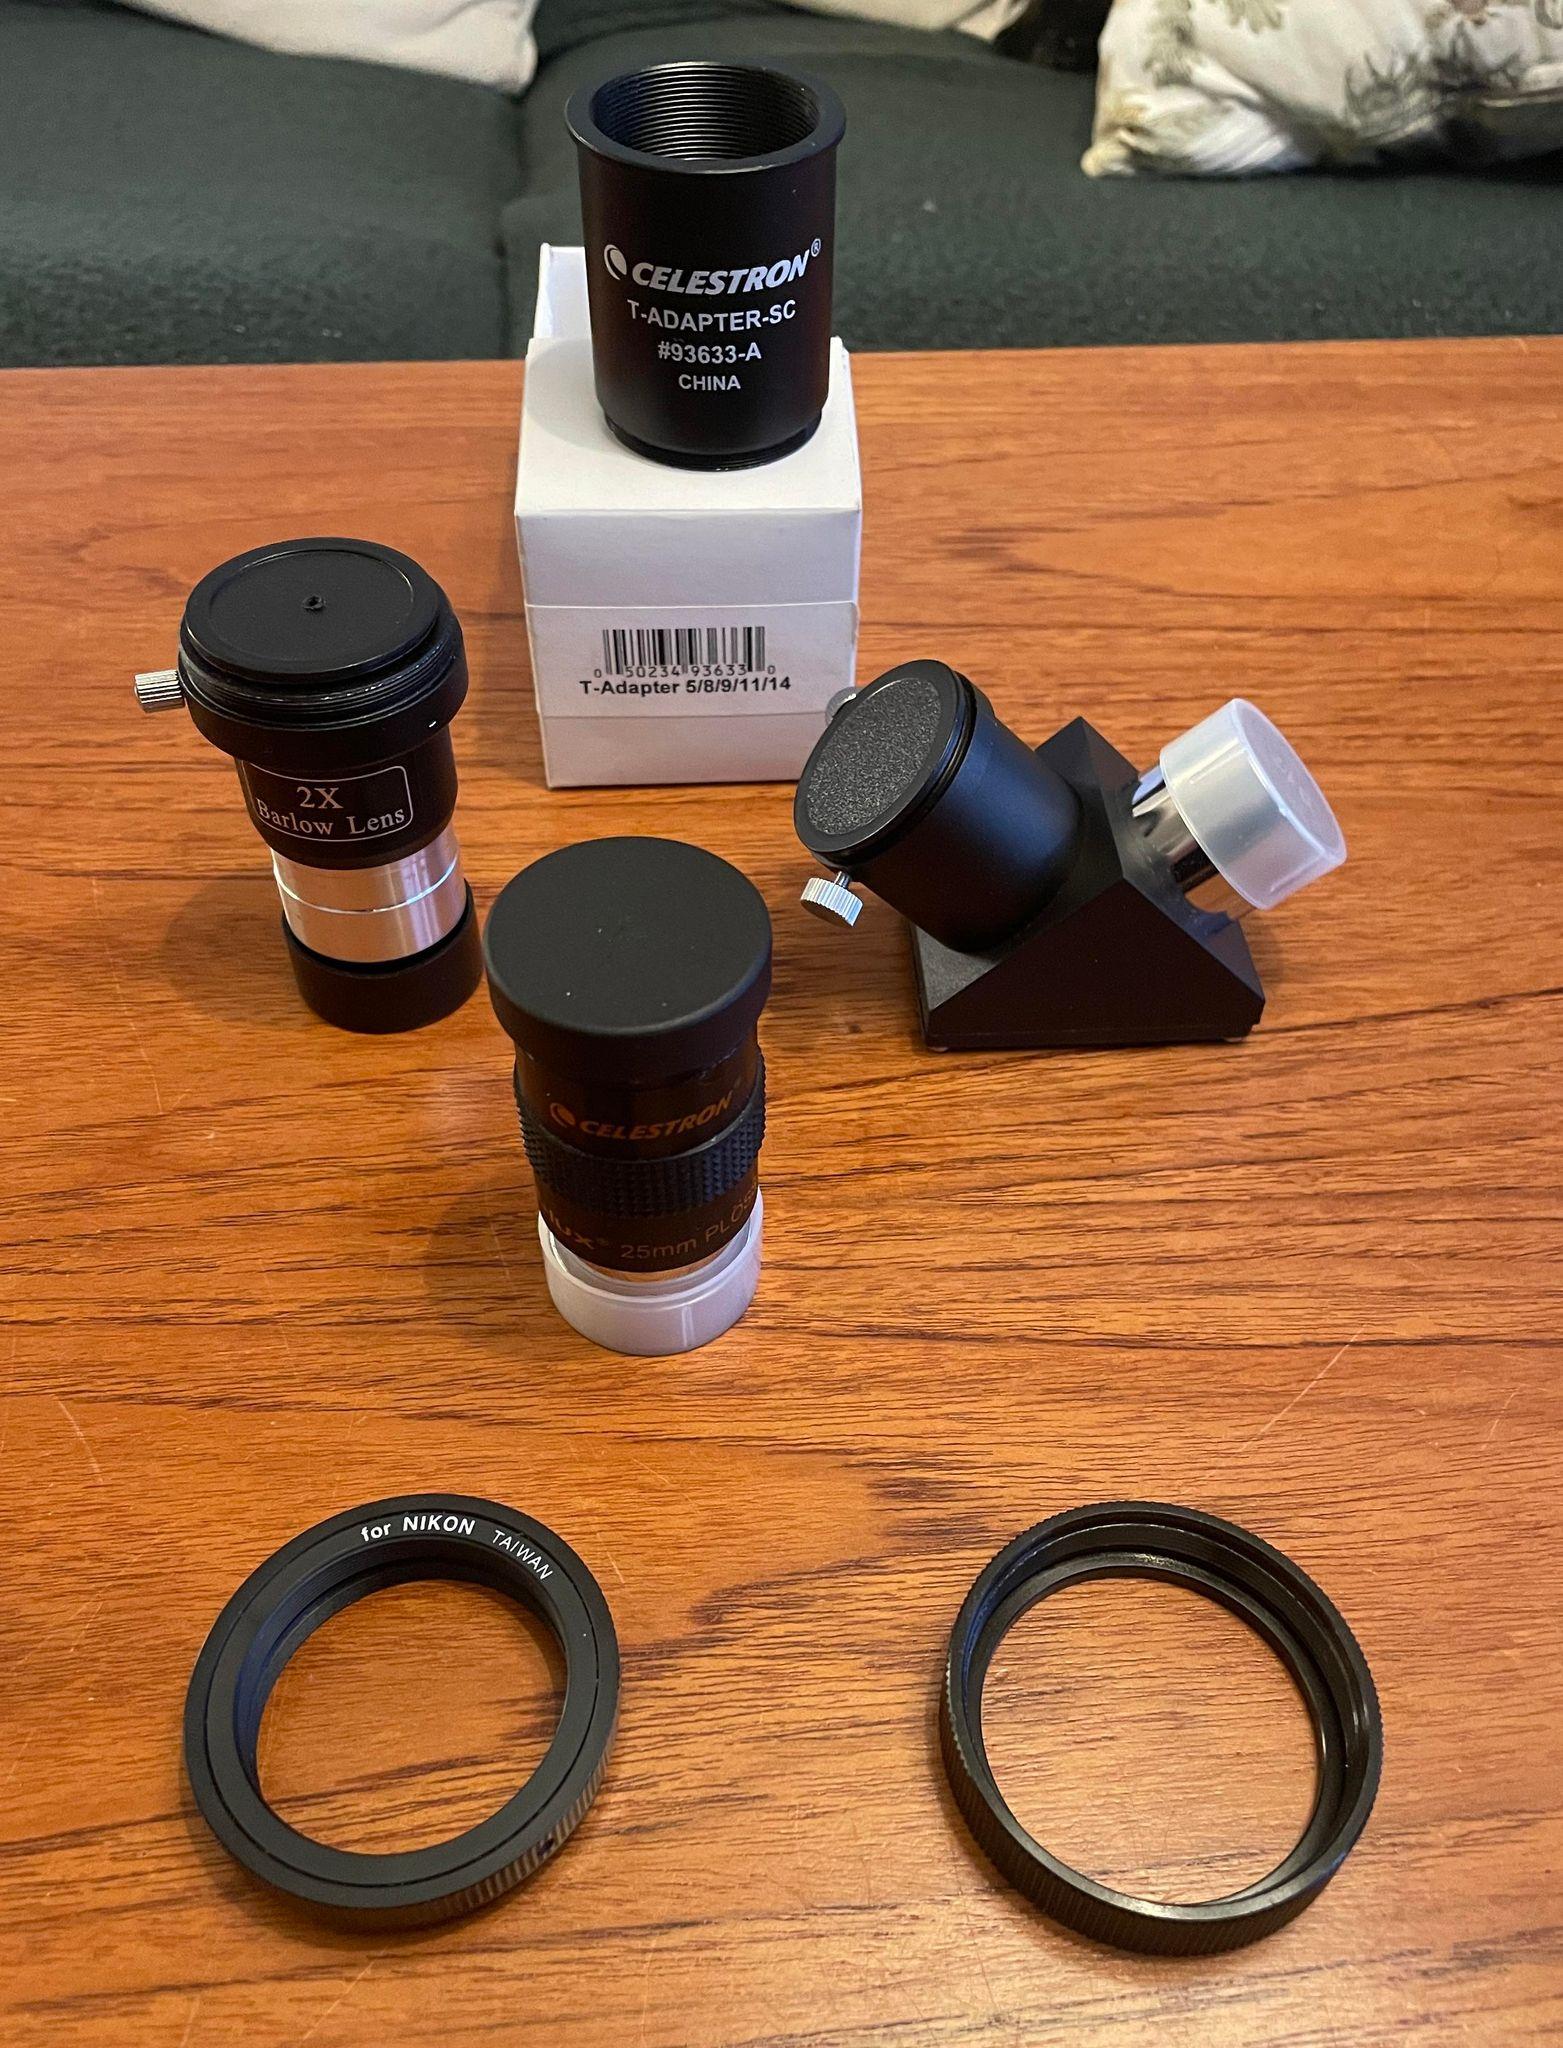 T-adapter, T2-Nikon adapter, Spegel diagonal, Barlow lens, Okular.